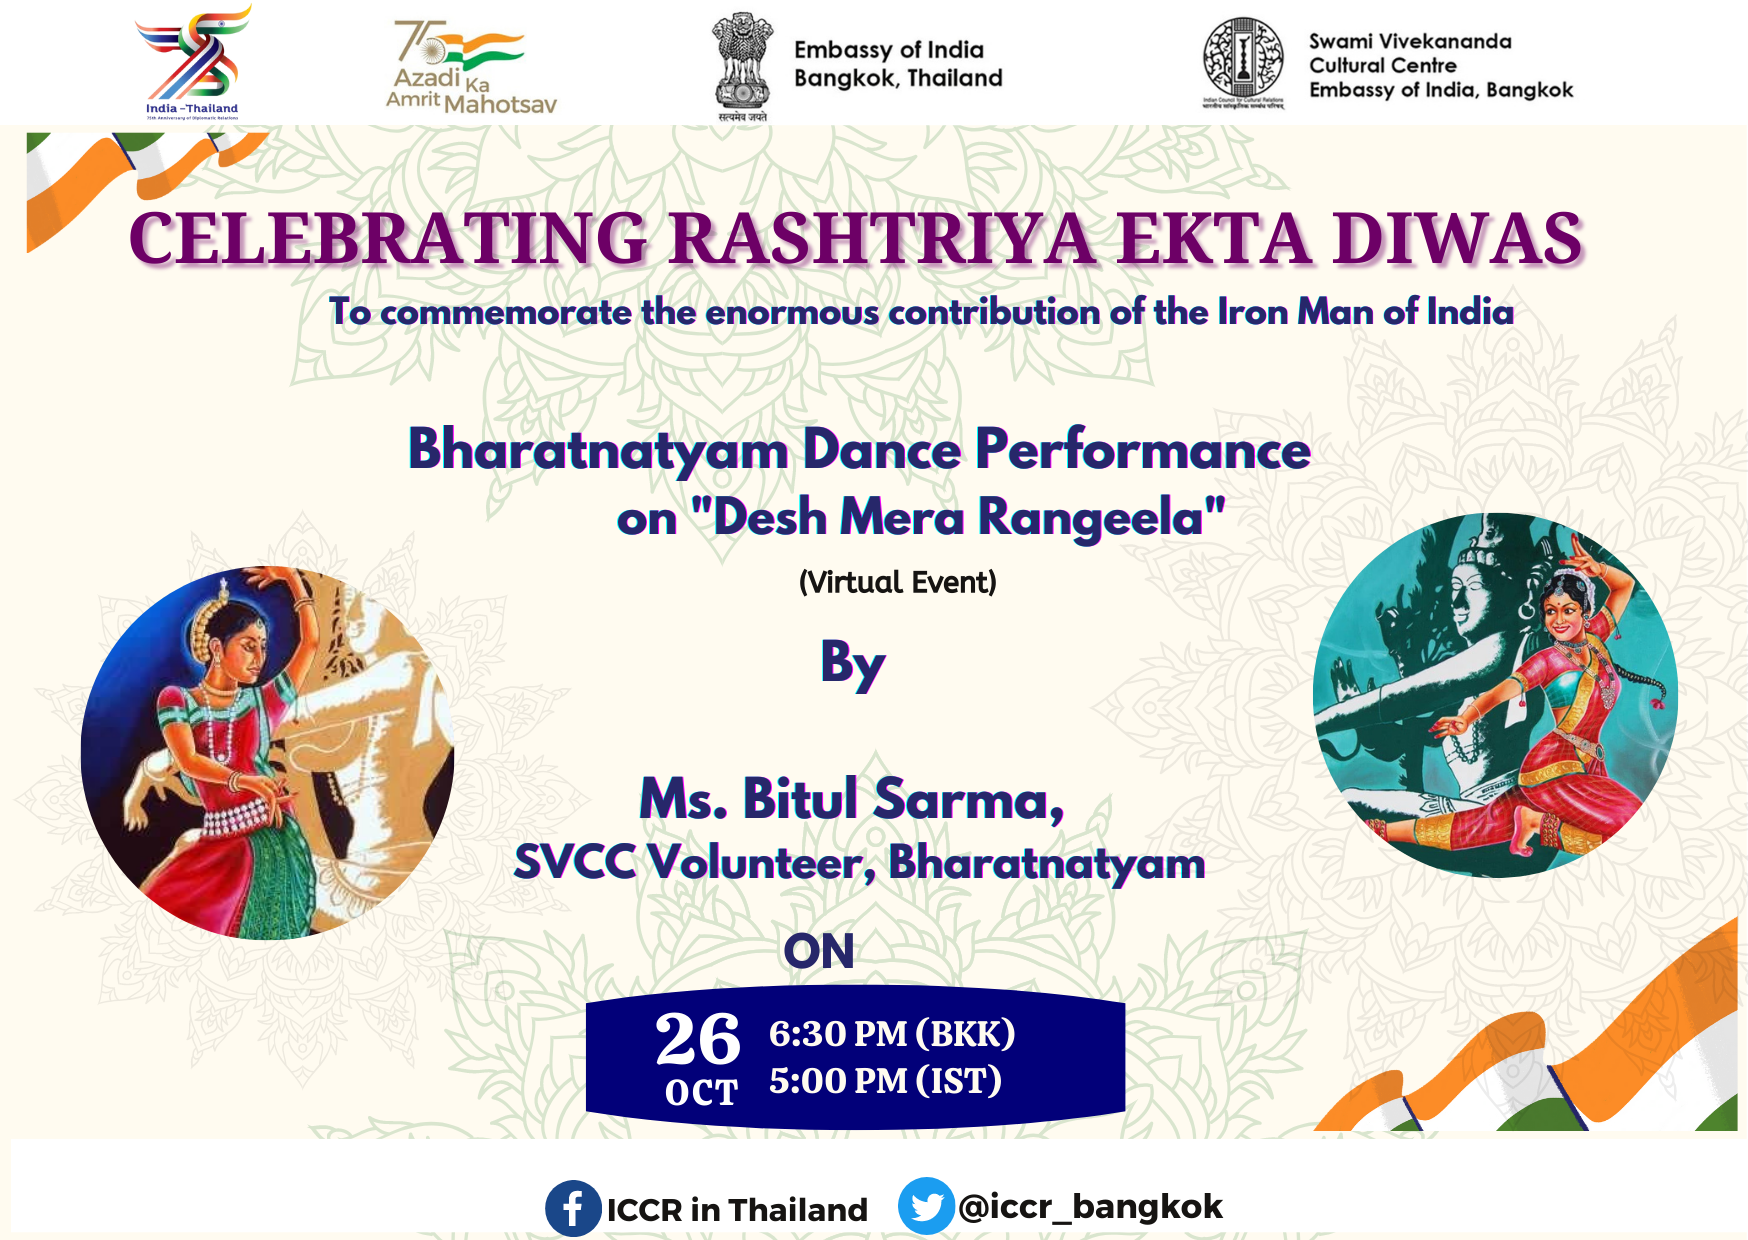 SVCC, Embassy of India, Bangkok presents a Bharatnatyam Dance Performance on the Patriotic Song "Desh Mera Rangeela" by Ms. Bitul Sarma, SVCC Volunteer, during Rashtriya Ekta Diwas Week